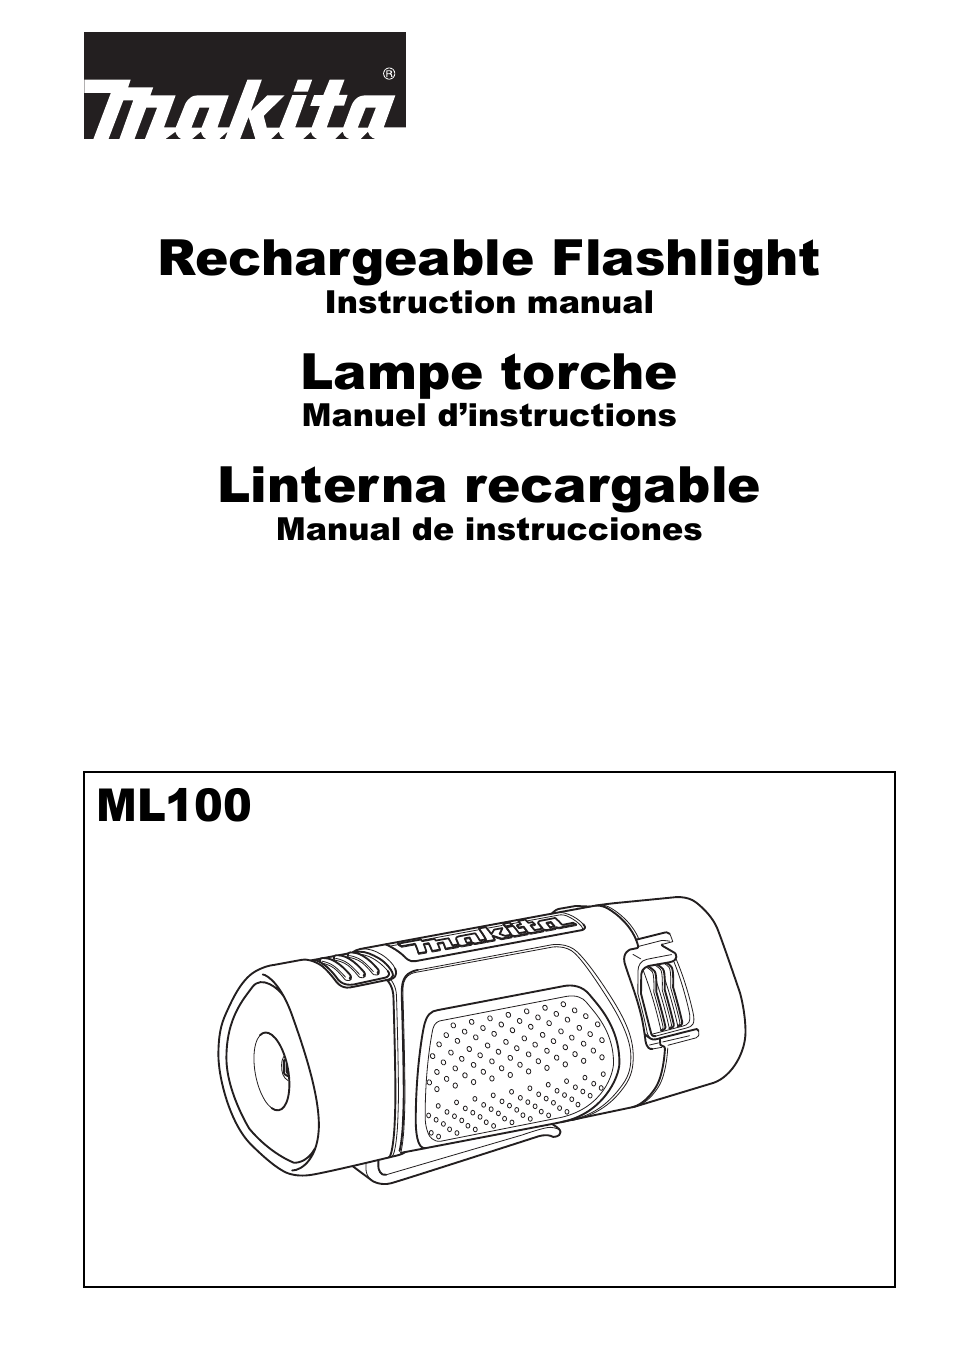 Rechargeable Flashlight ML100